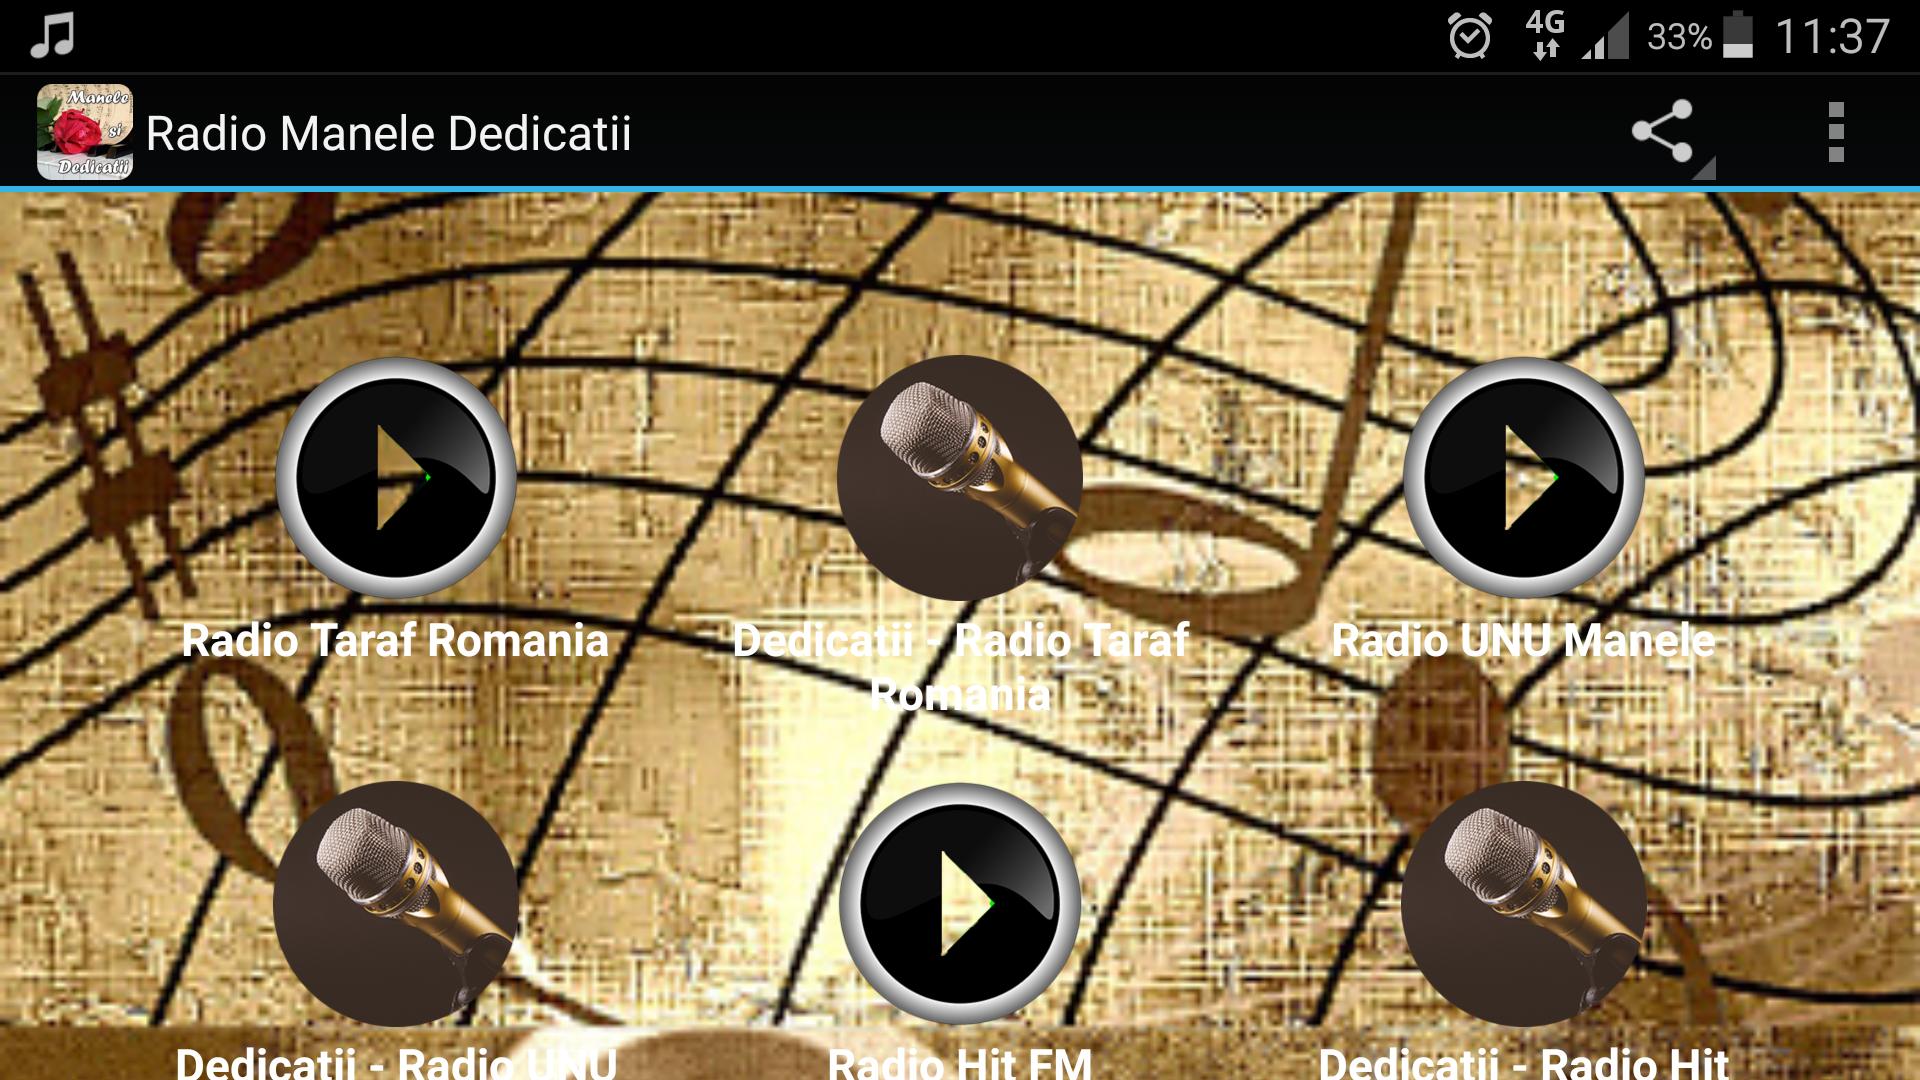 Radio Manele Dedicatii APK for Android Download